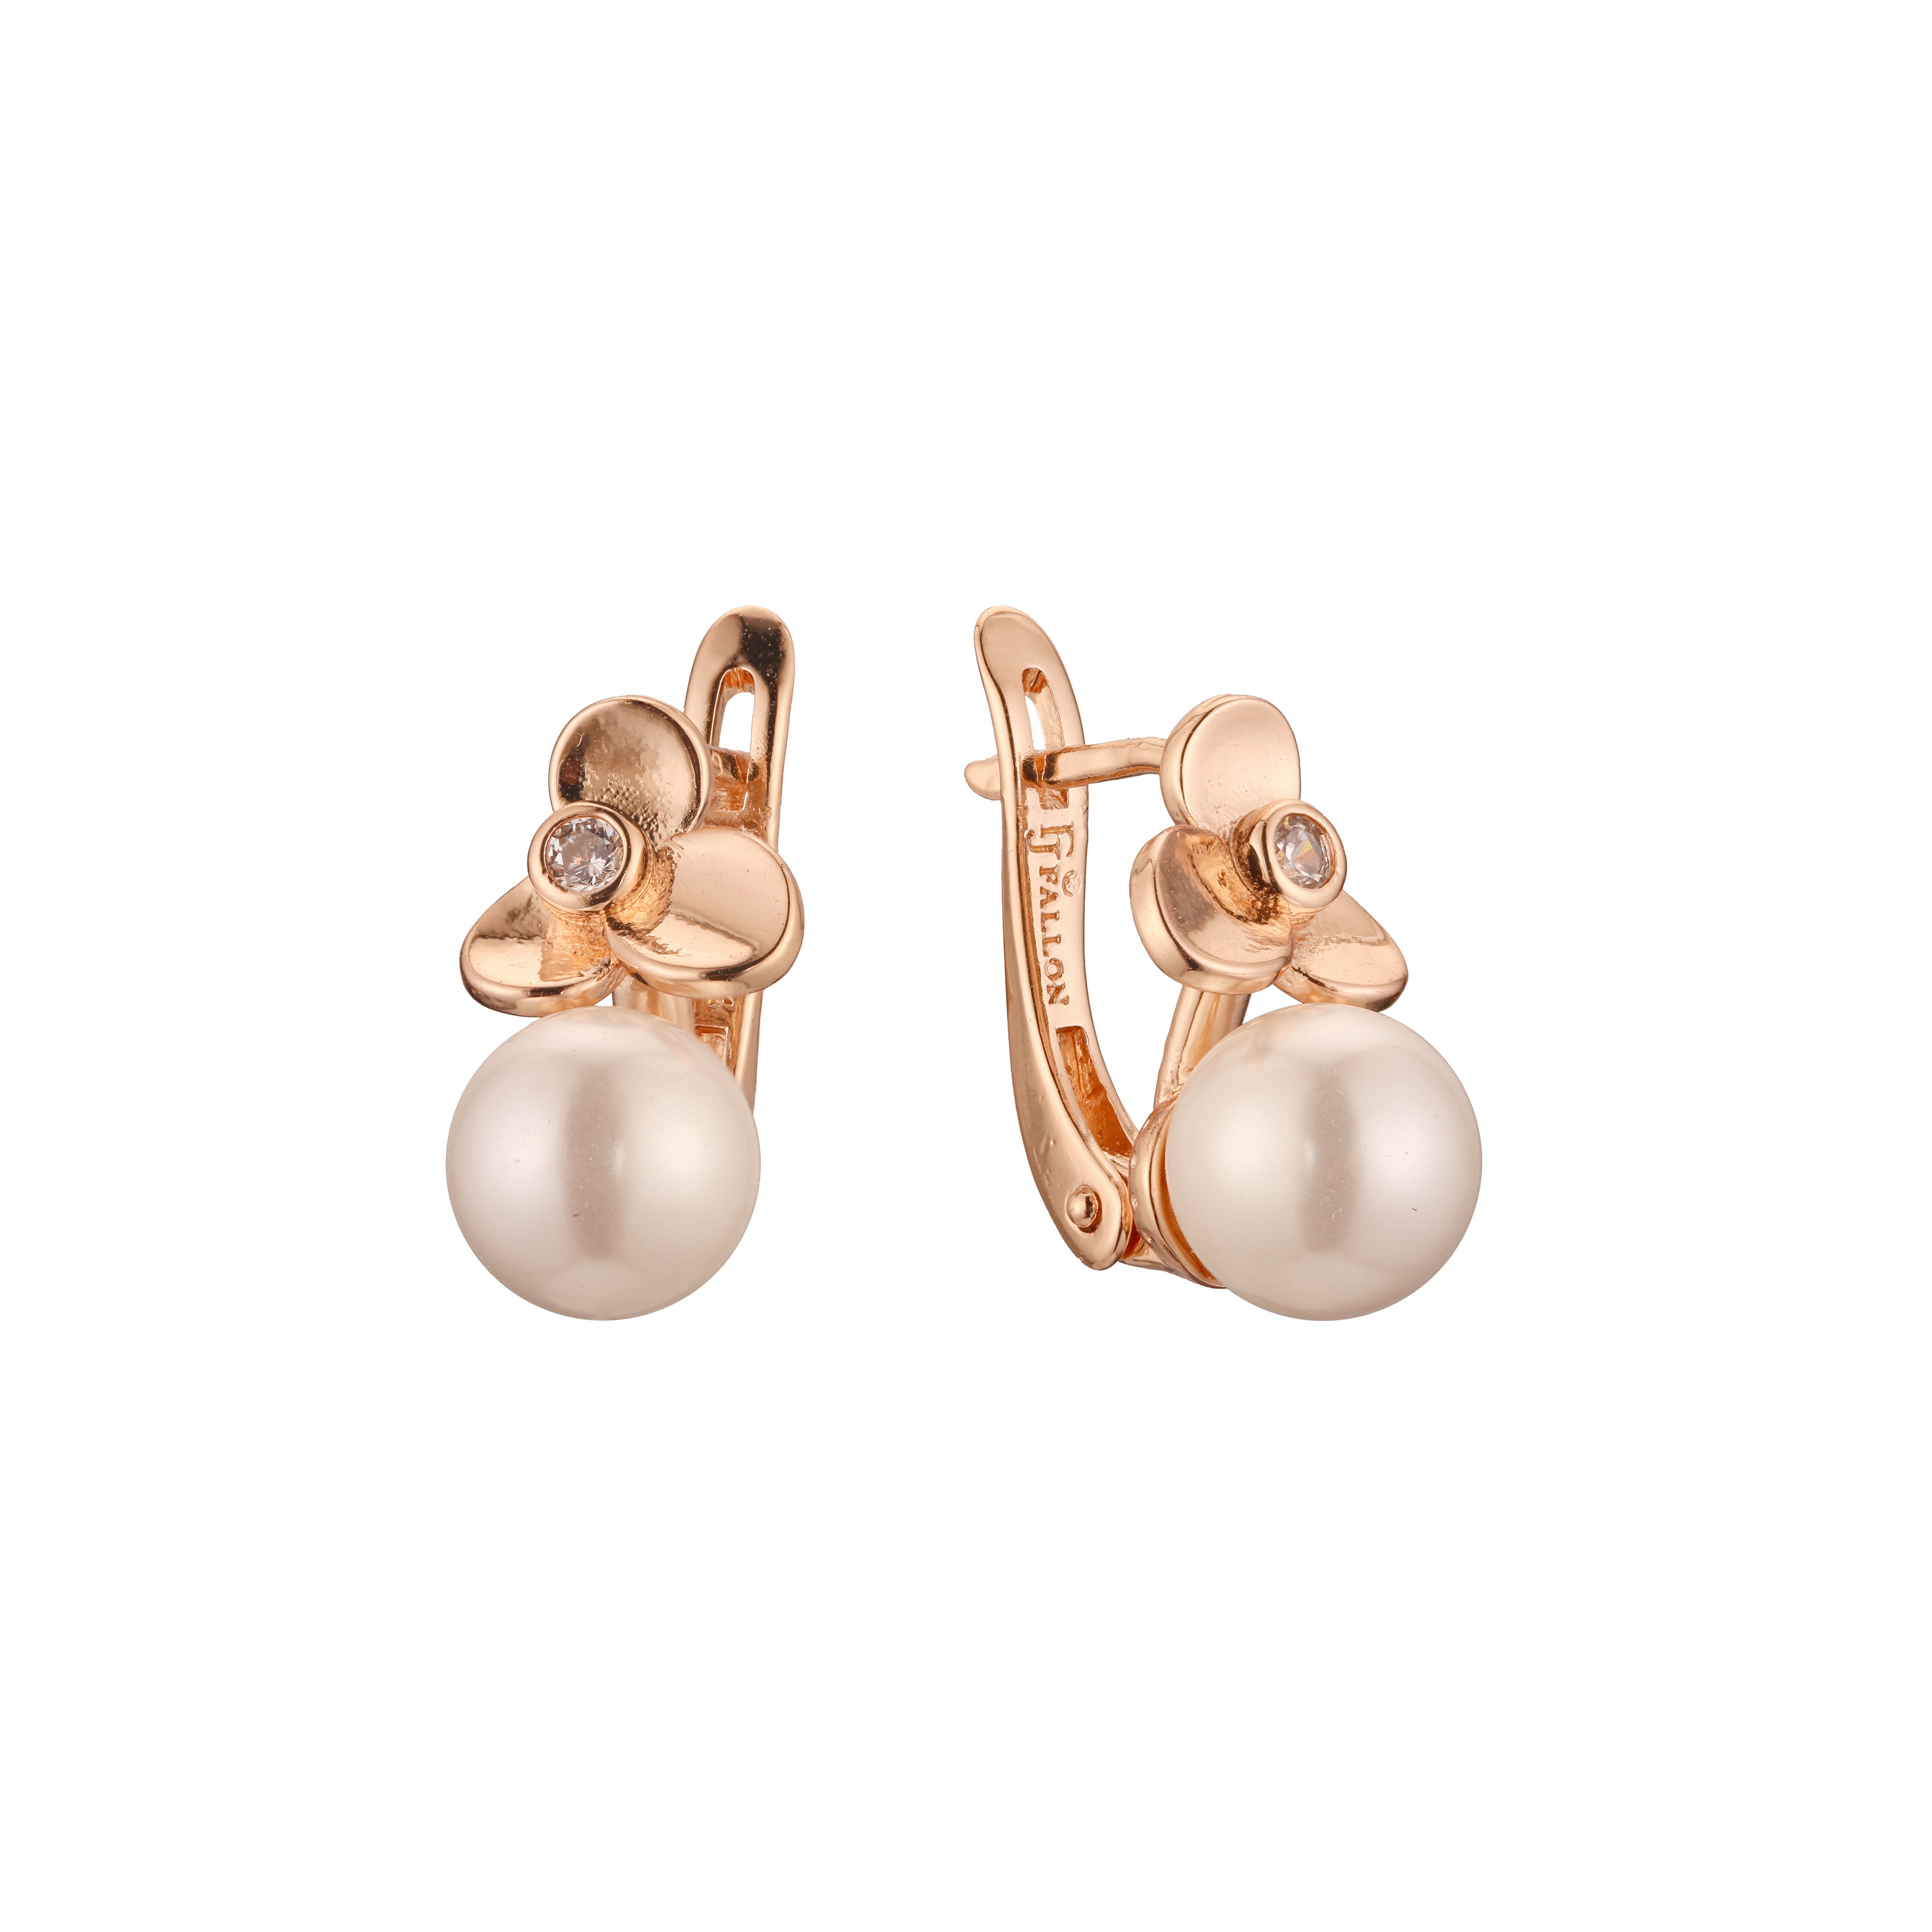 Flower pearl earrings in 14K Gold, Rose Gold plating colors